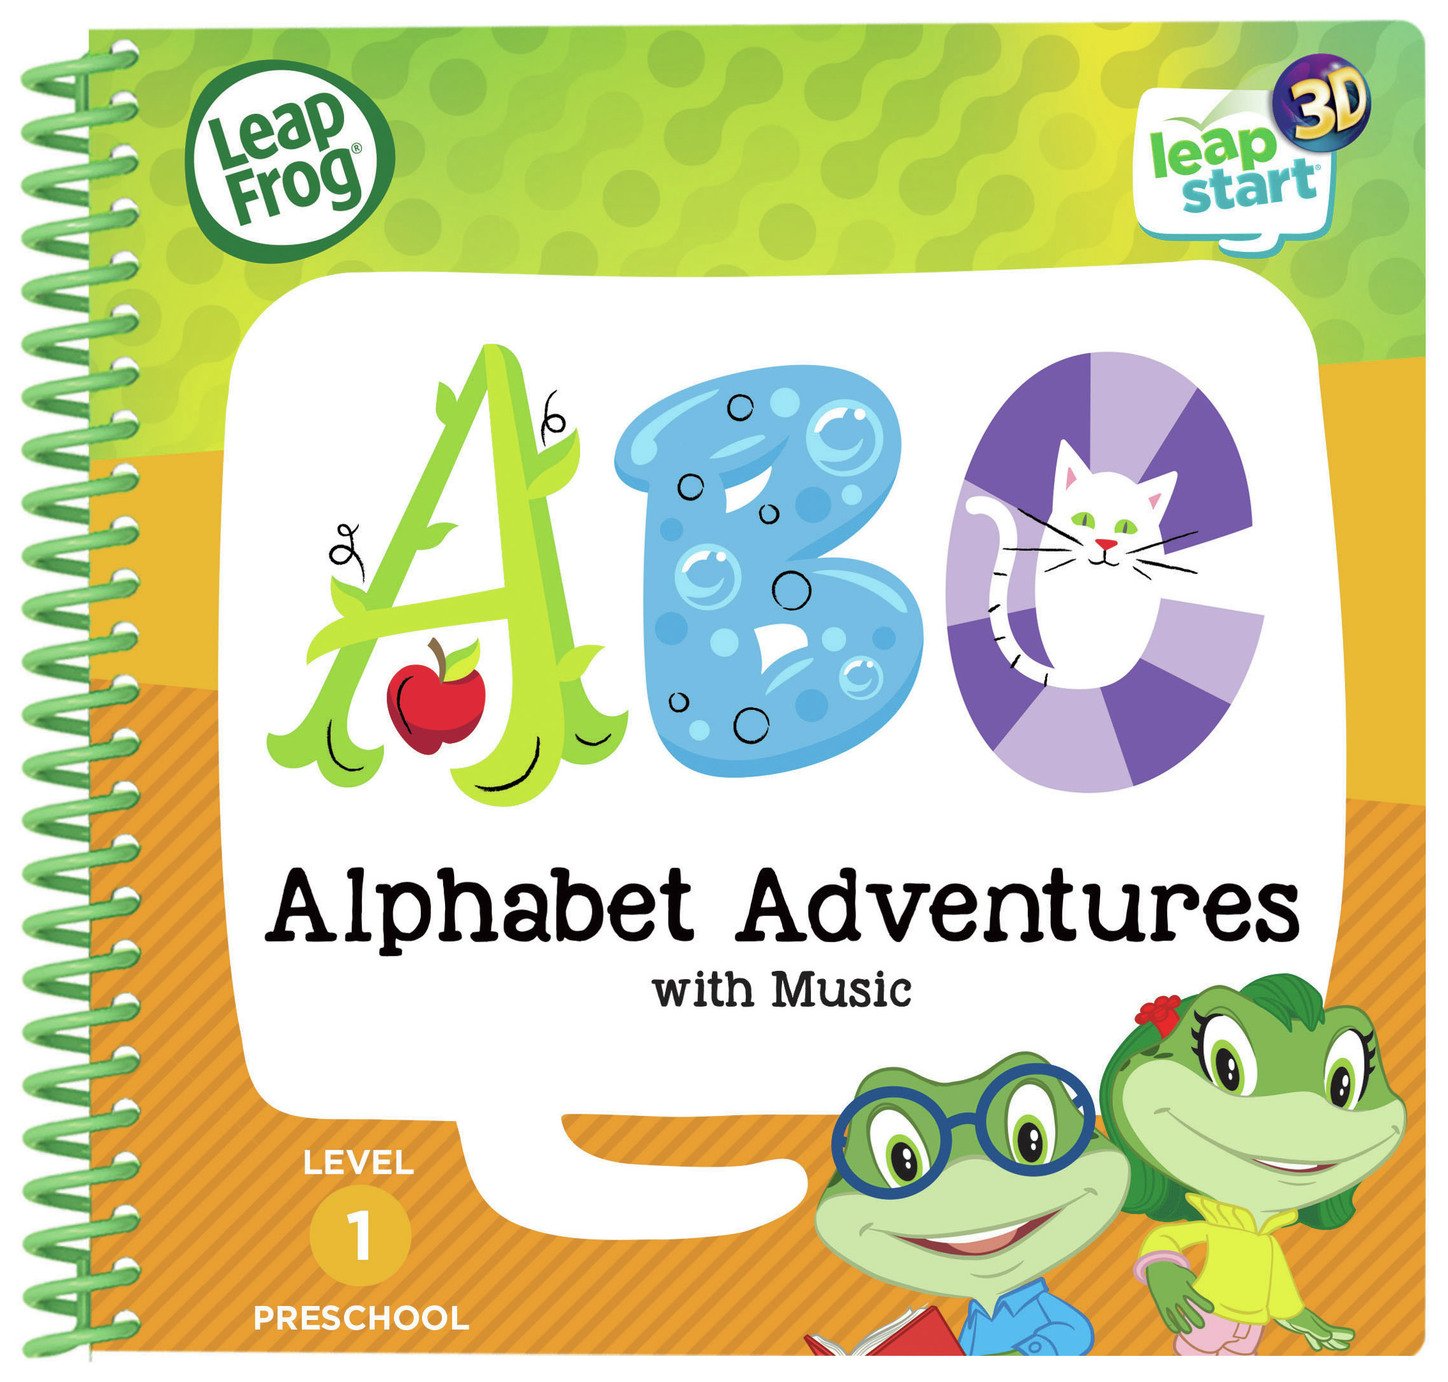 LeapFrog Alphabet Adventures Book Review